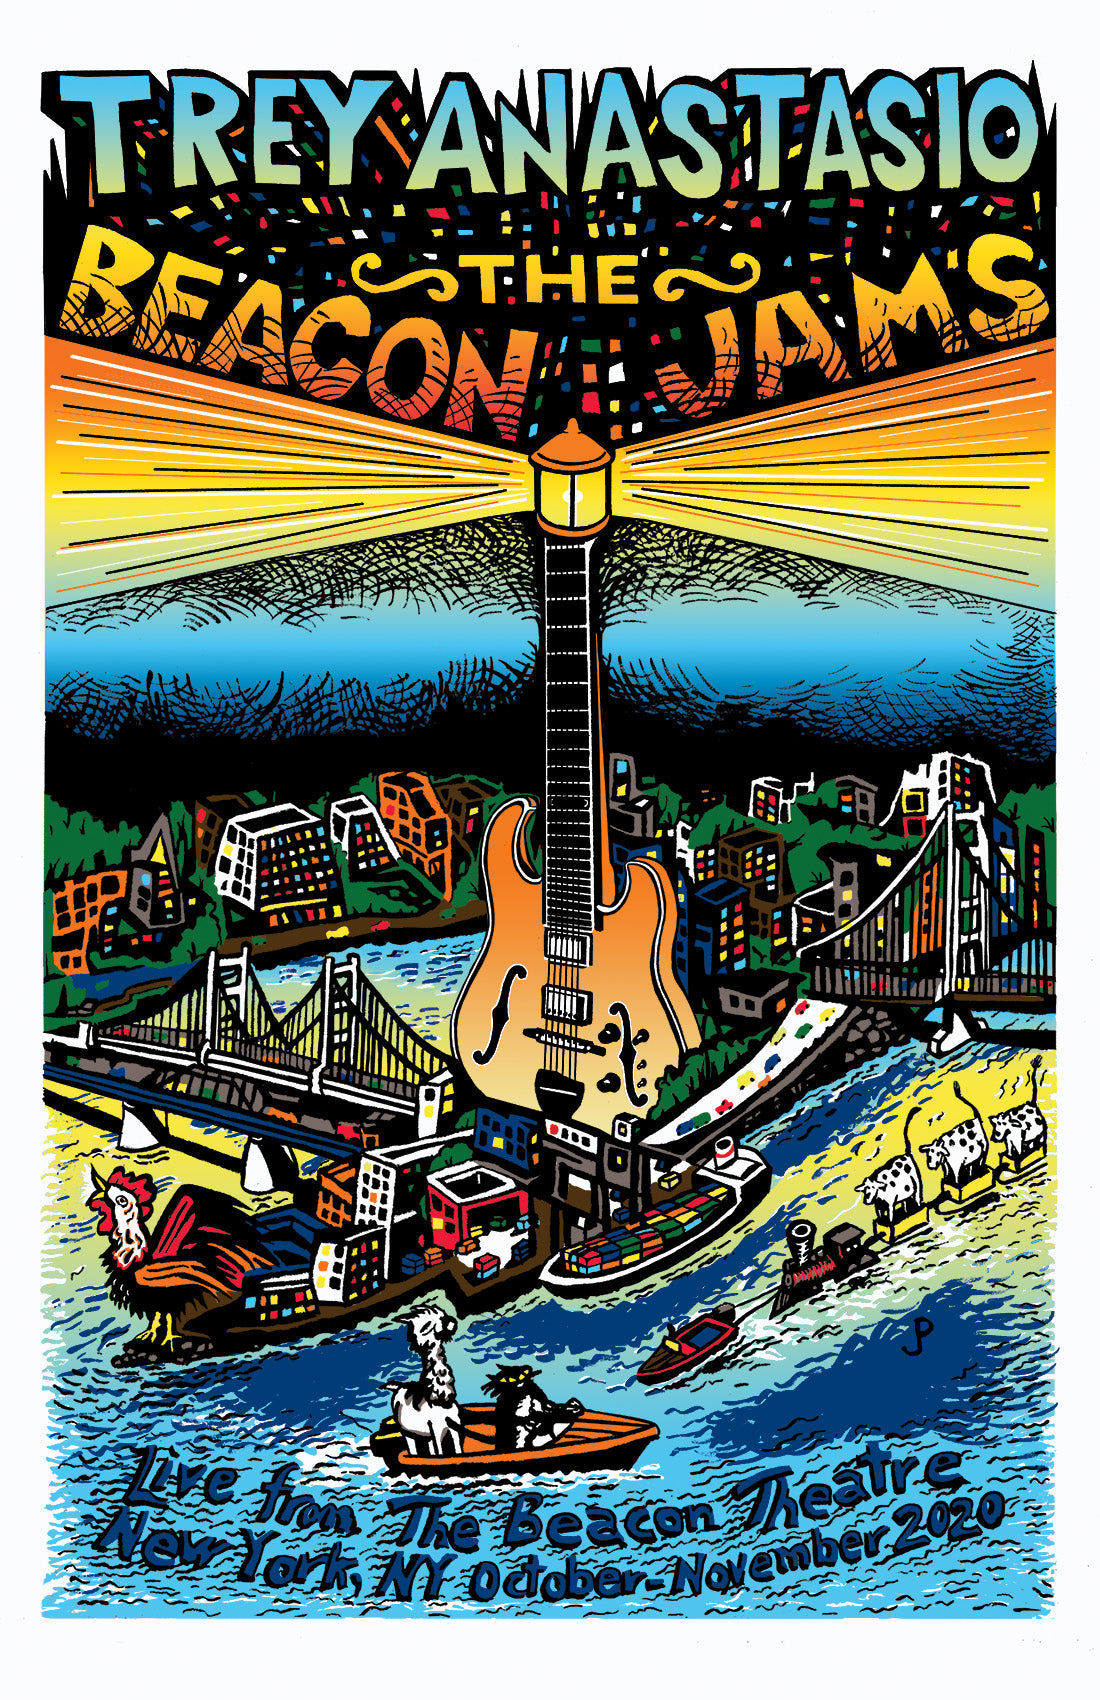 Jim Pollock "The Beacon Jams" Divided Sky Fund Variant